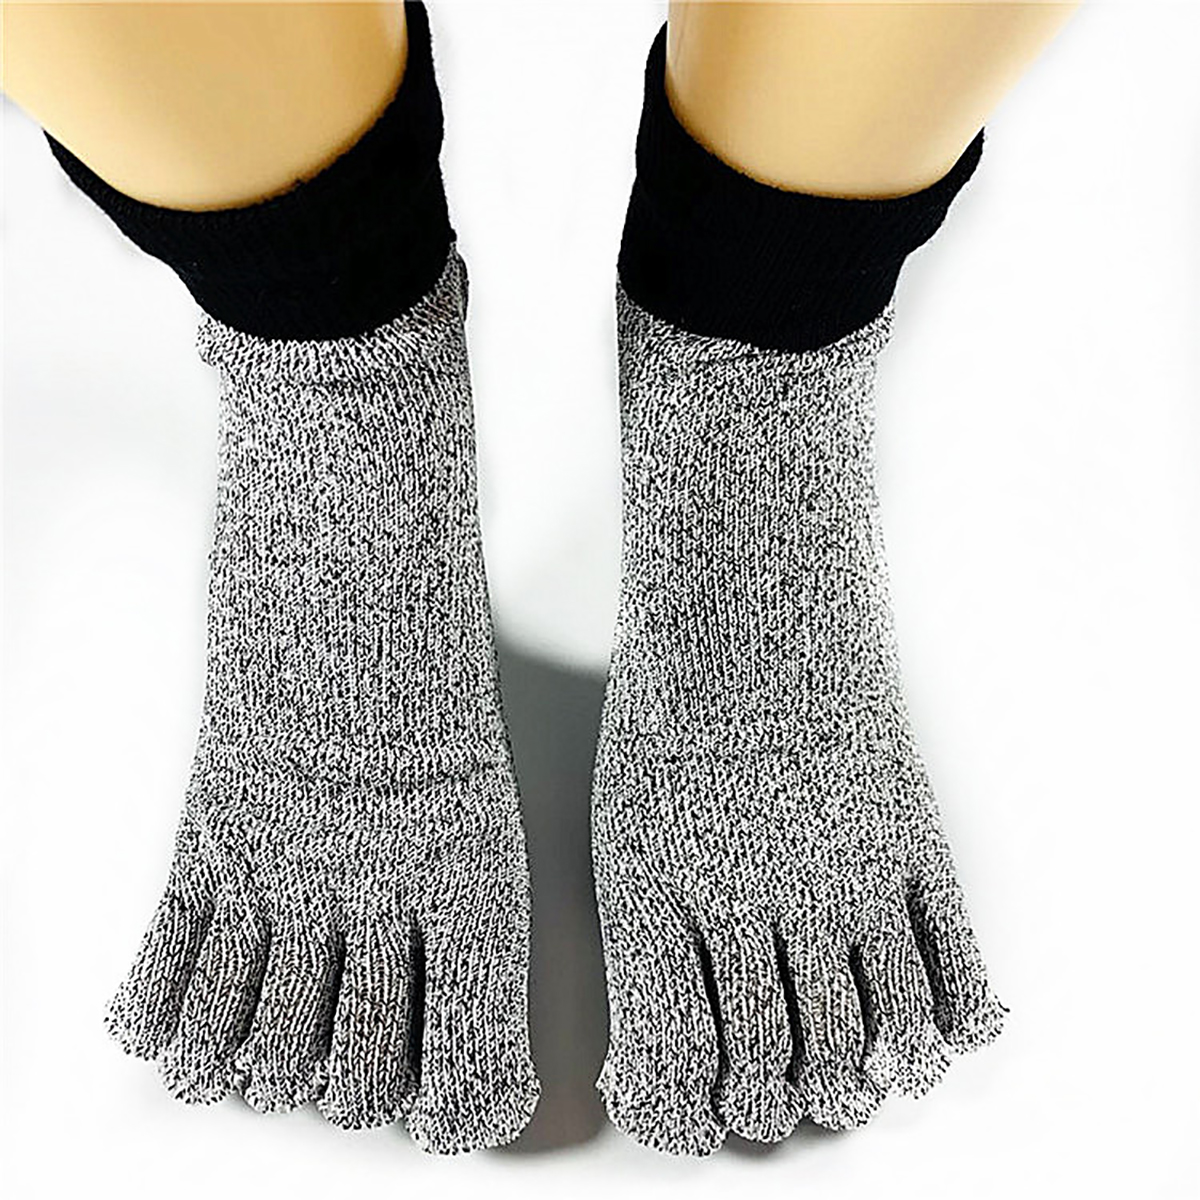 A-Pair-of-Unisex-No-Slip-Anti-Skid-Breathable-Toe-Socks-Bare-Feet-Running-Beach-HPPE-Sock-1583549-3